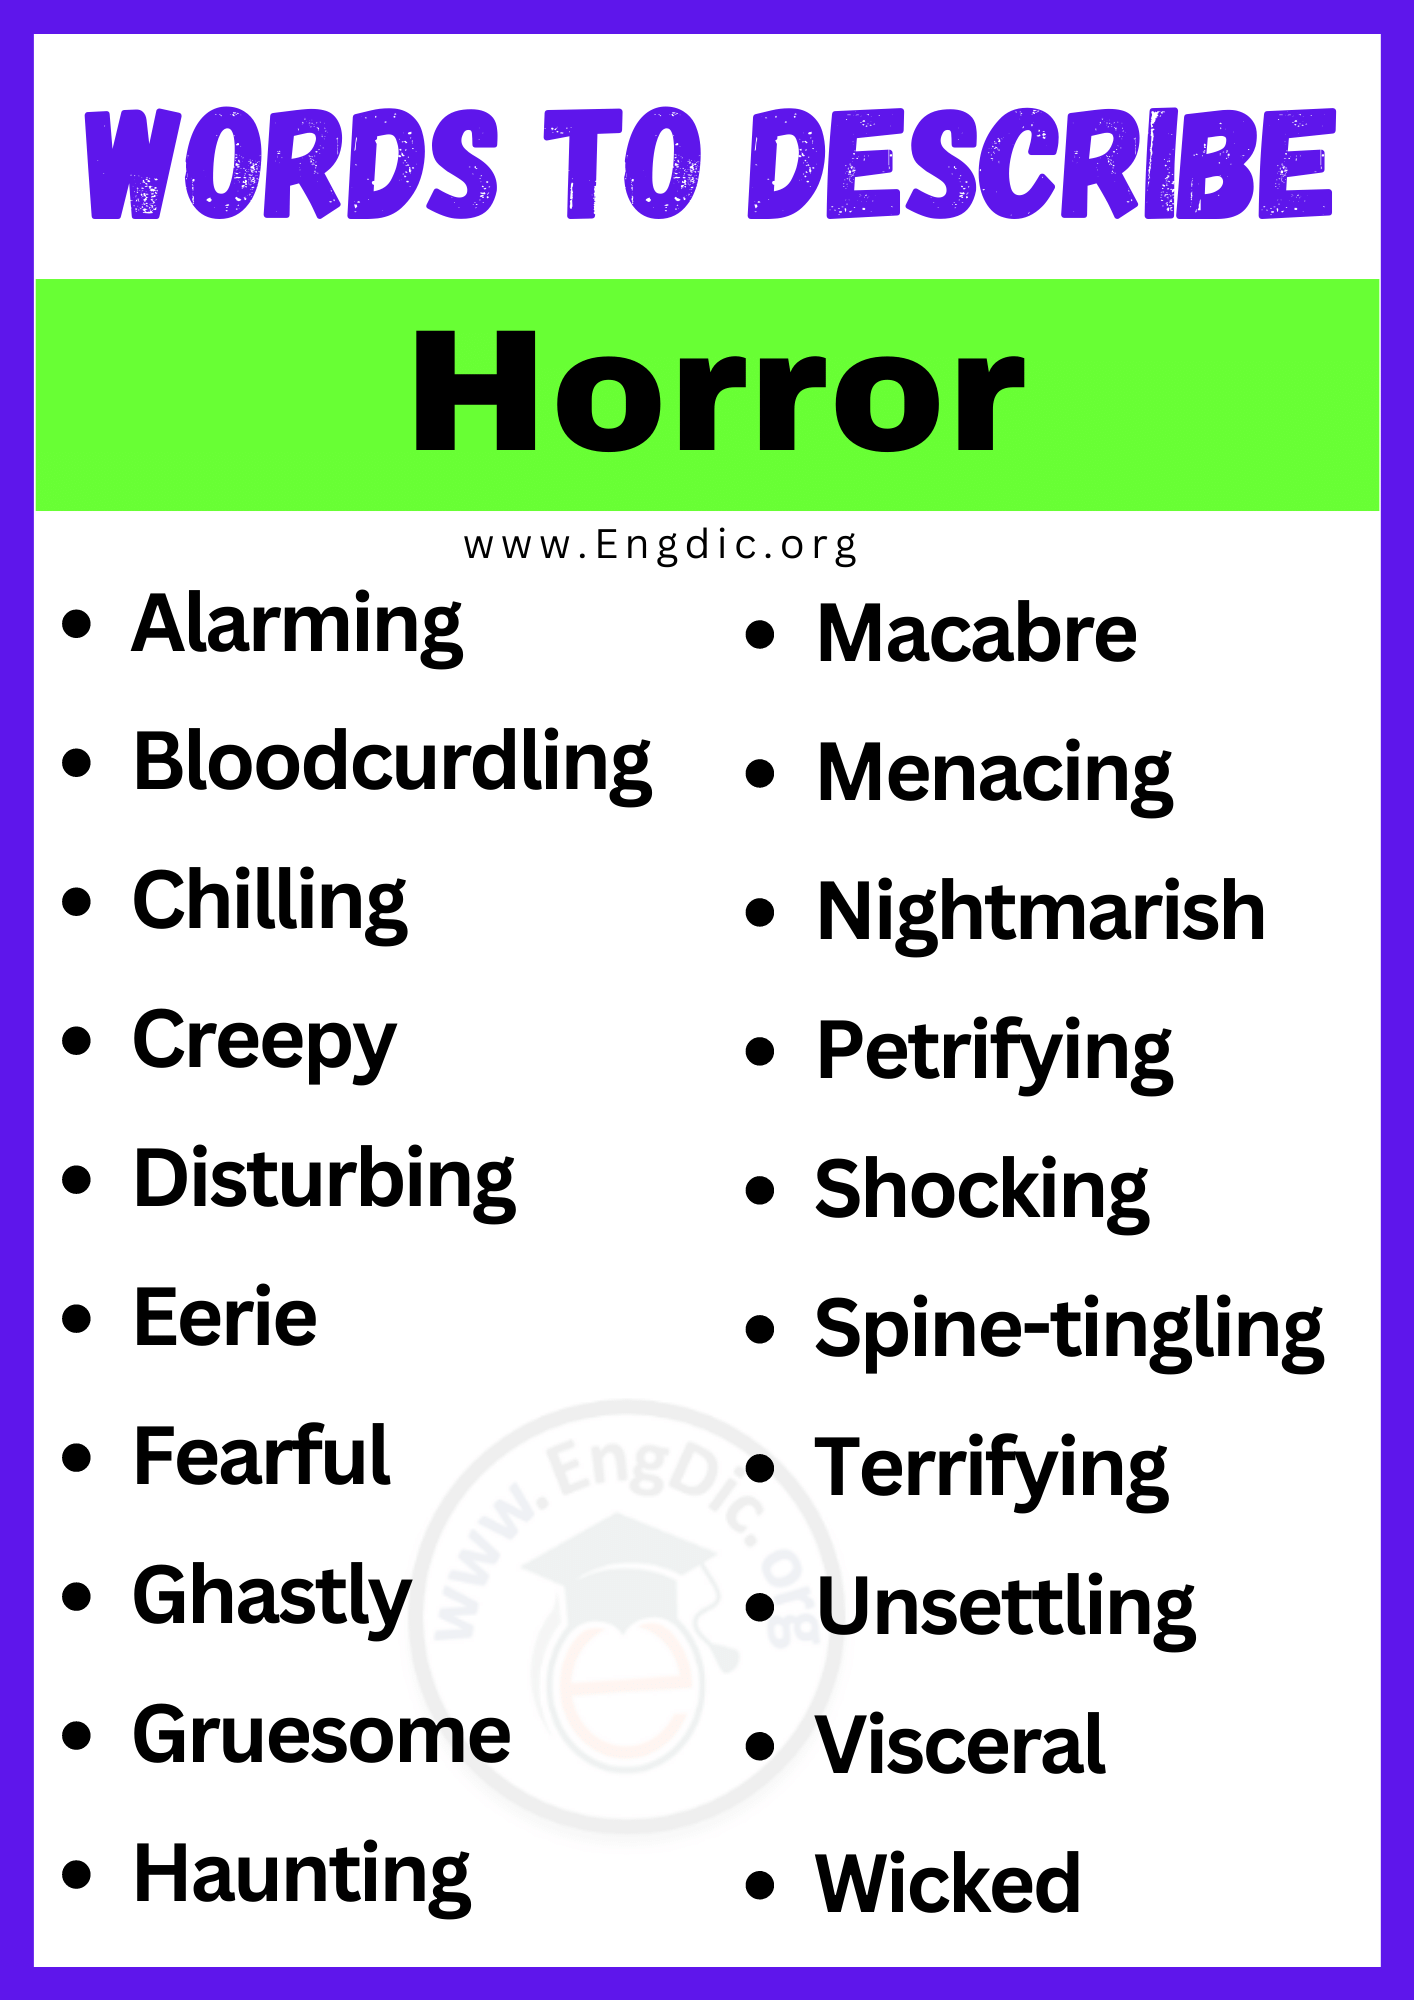 Words to Describe Horror